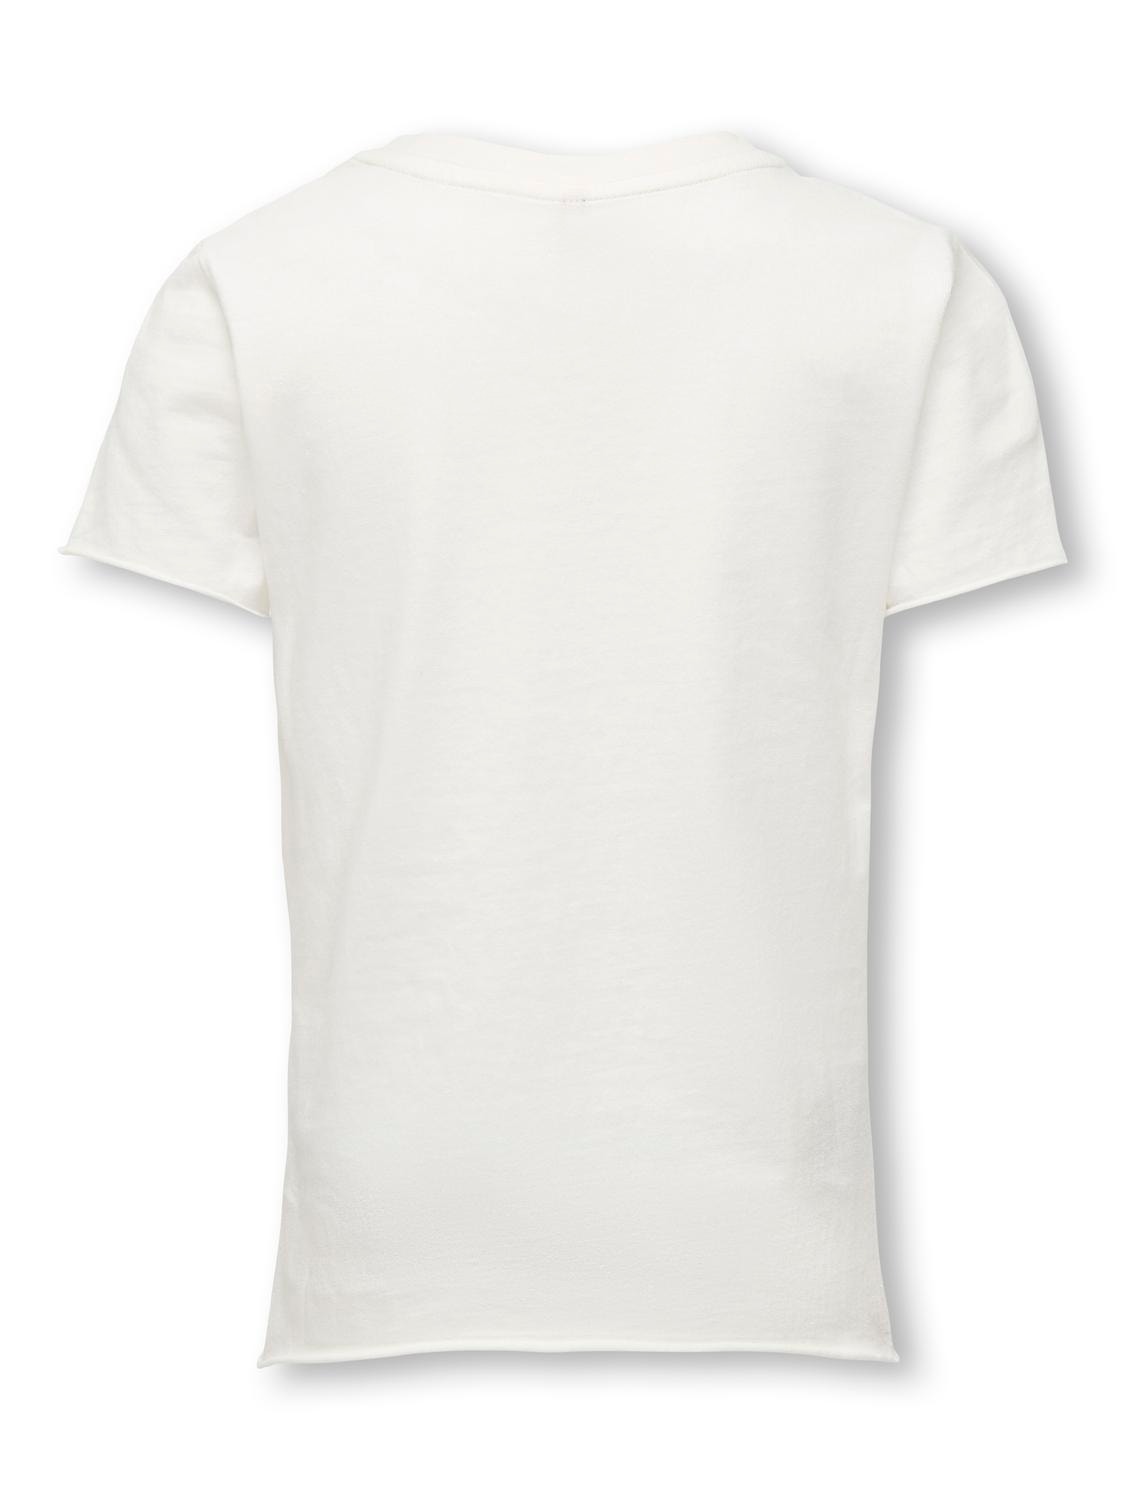 ONLY Camisetas Corte slim Cuello redondo -Cloud Dancer - 15299802